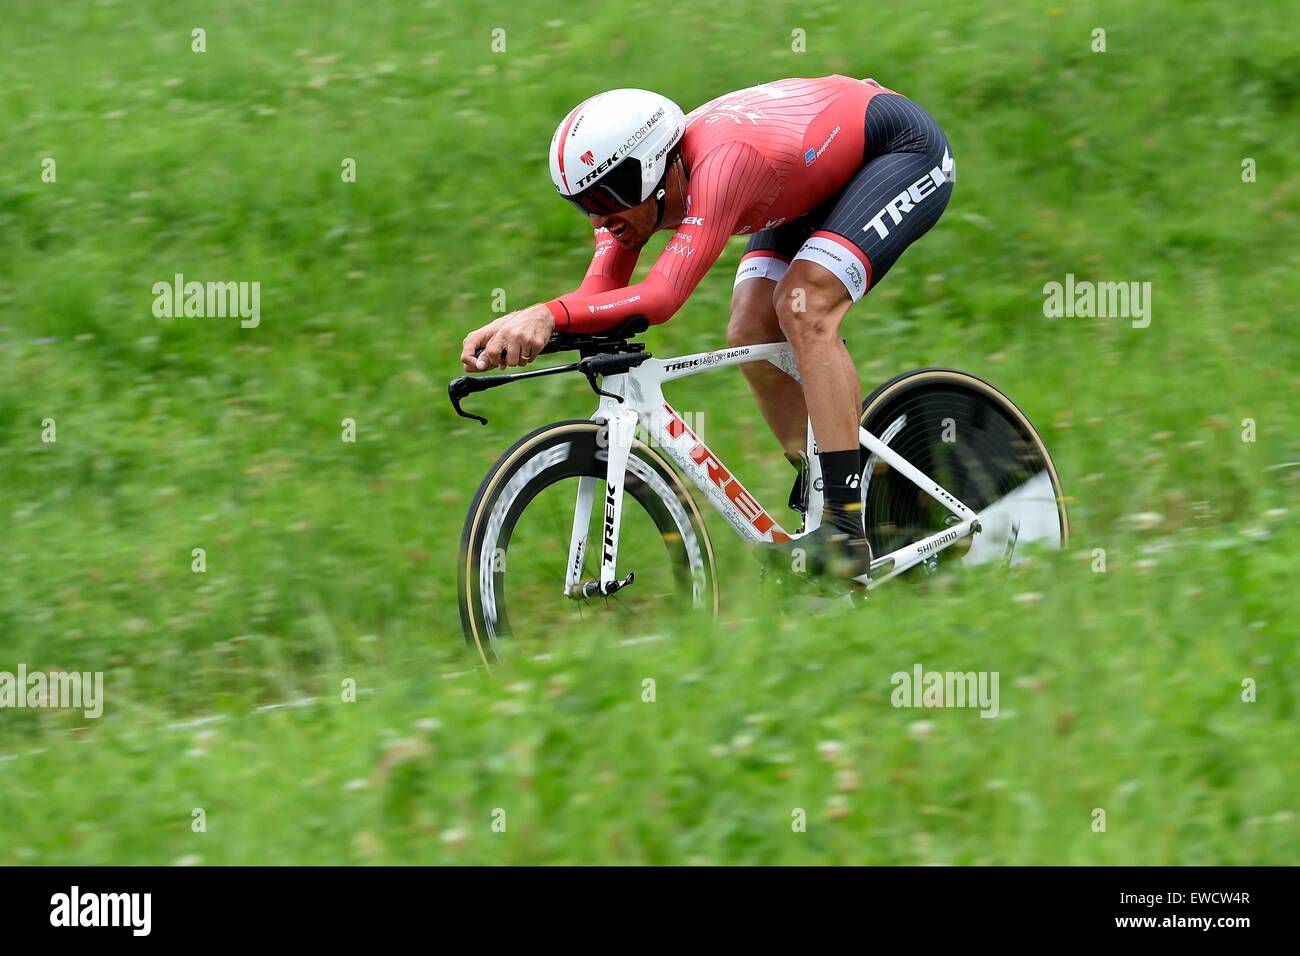 Berne, Switzerland. 21st June, 2015. UCI Tour of Switzerland Cycling. Final  stage 9. CANCELLARA Fabian of Trek Factory Racing Credit: Action Plus  Sports/Alamy Live News Stock Photo - Alamy